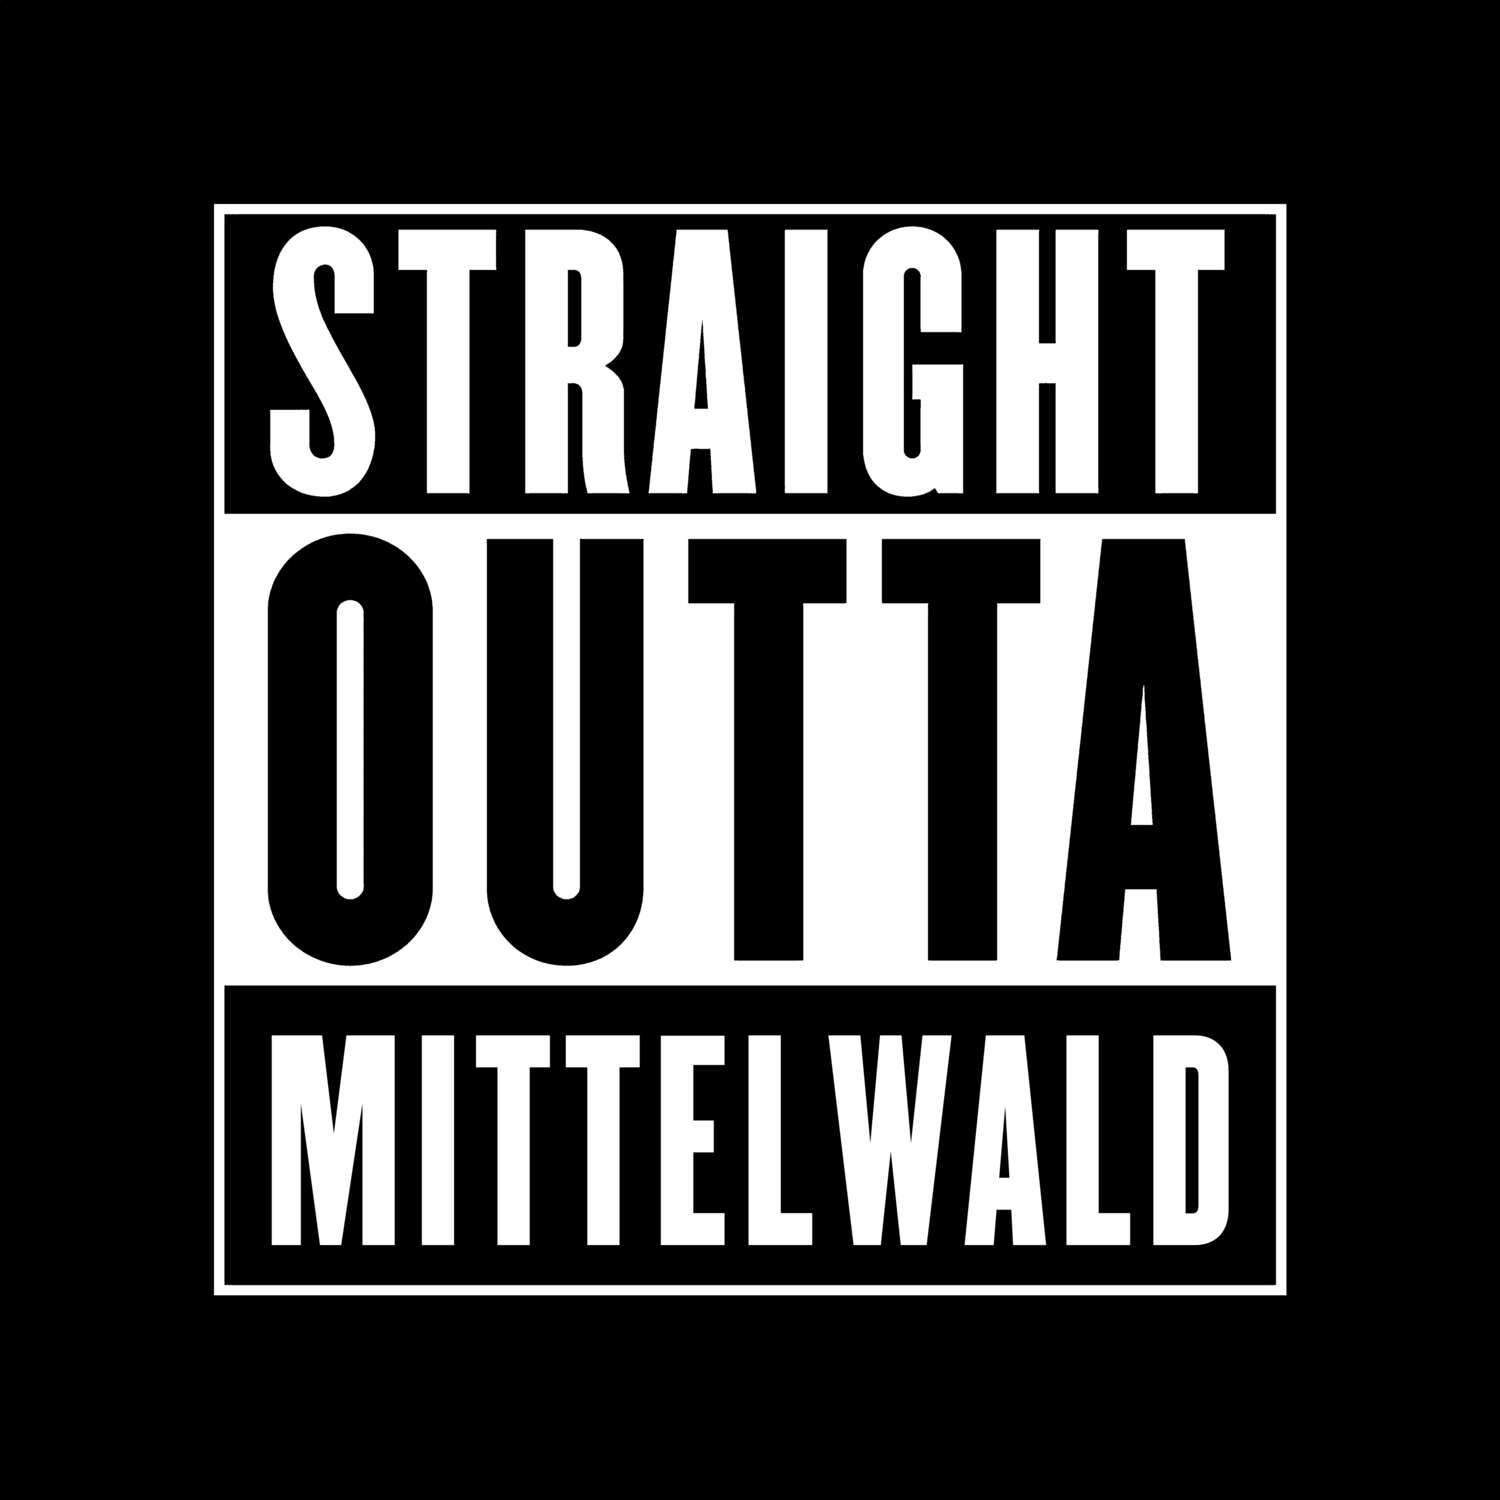 Mittelwald T-Shirt »Straight Outta«